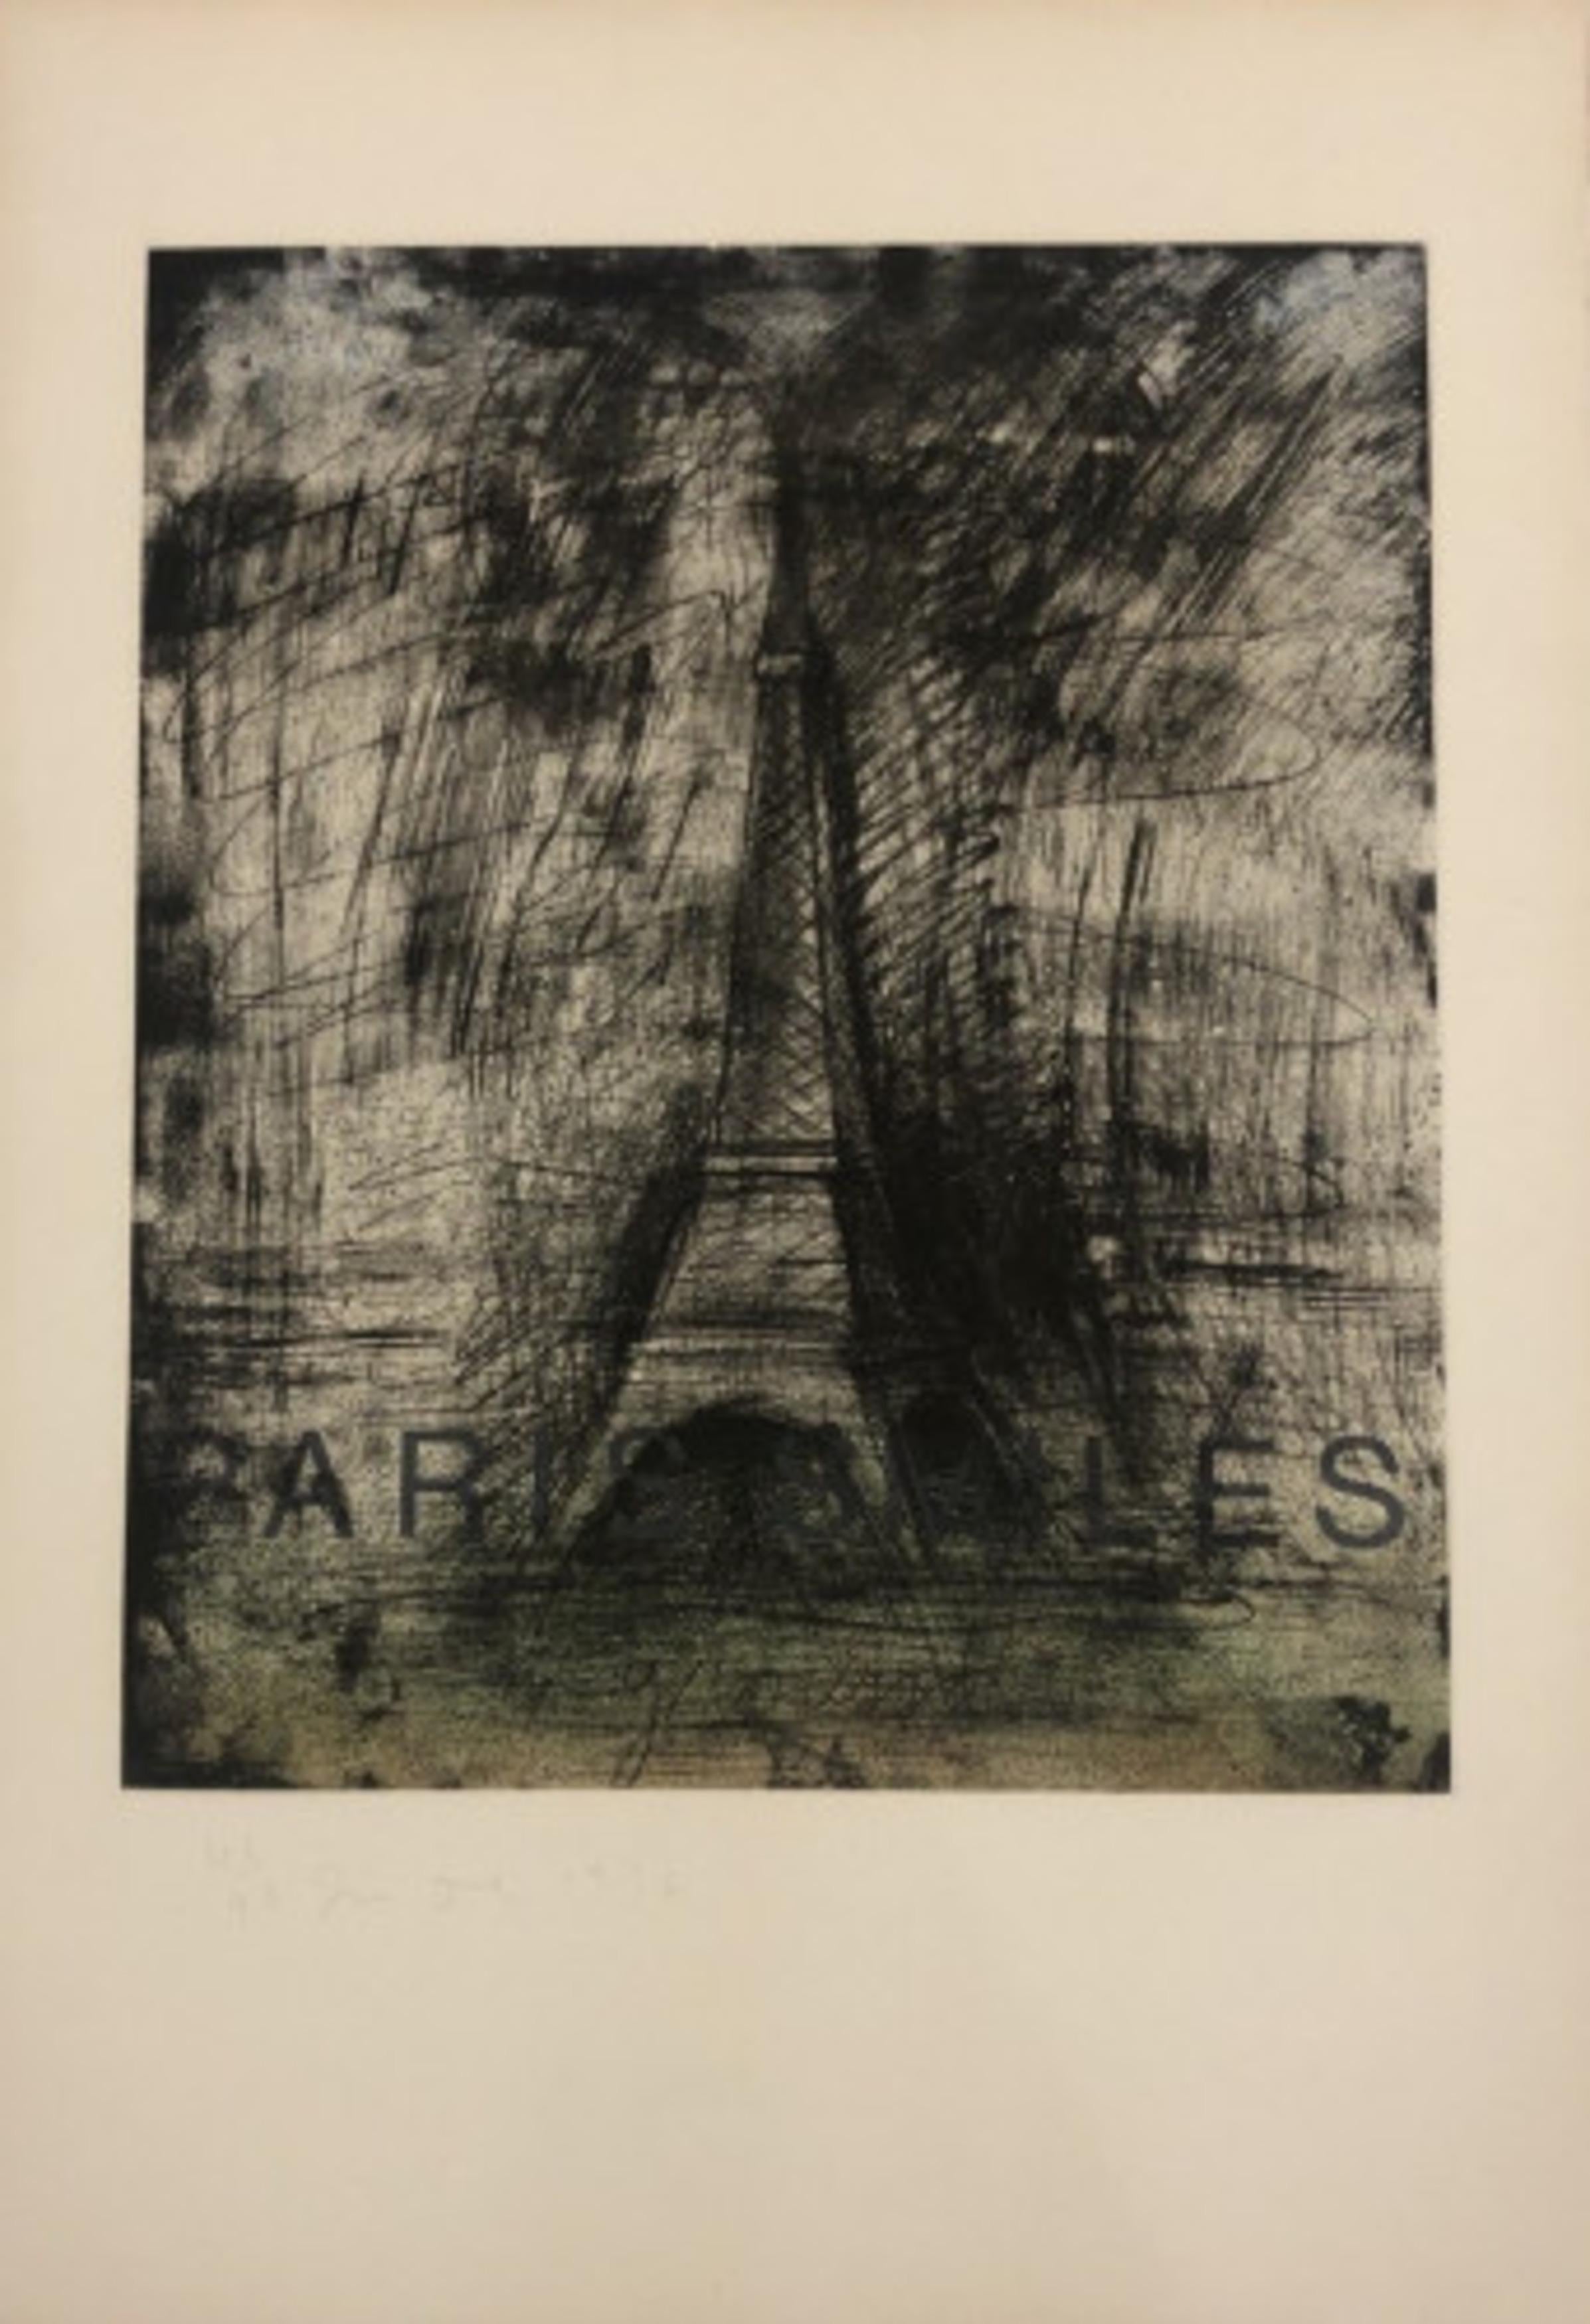 Paris Smiles in Darkness - Print by Jim Dine